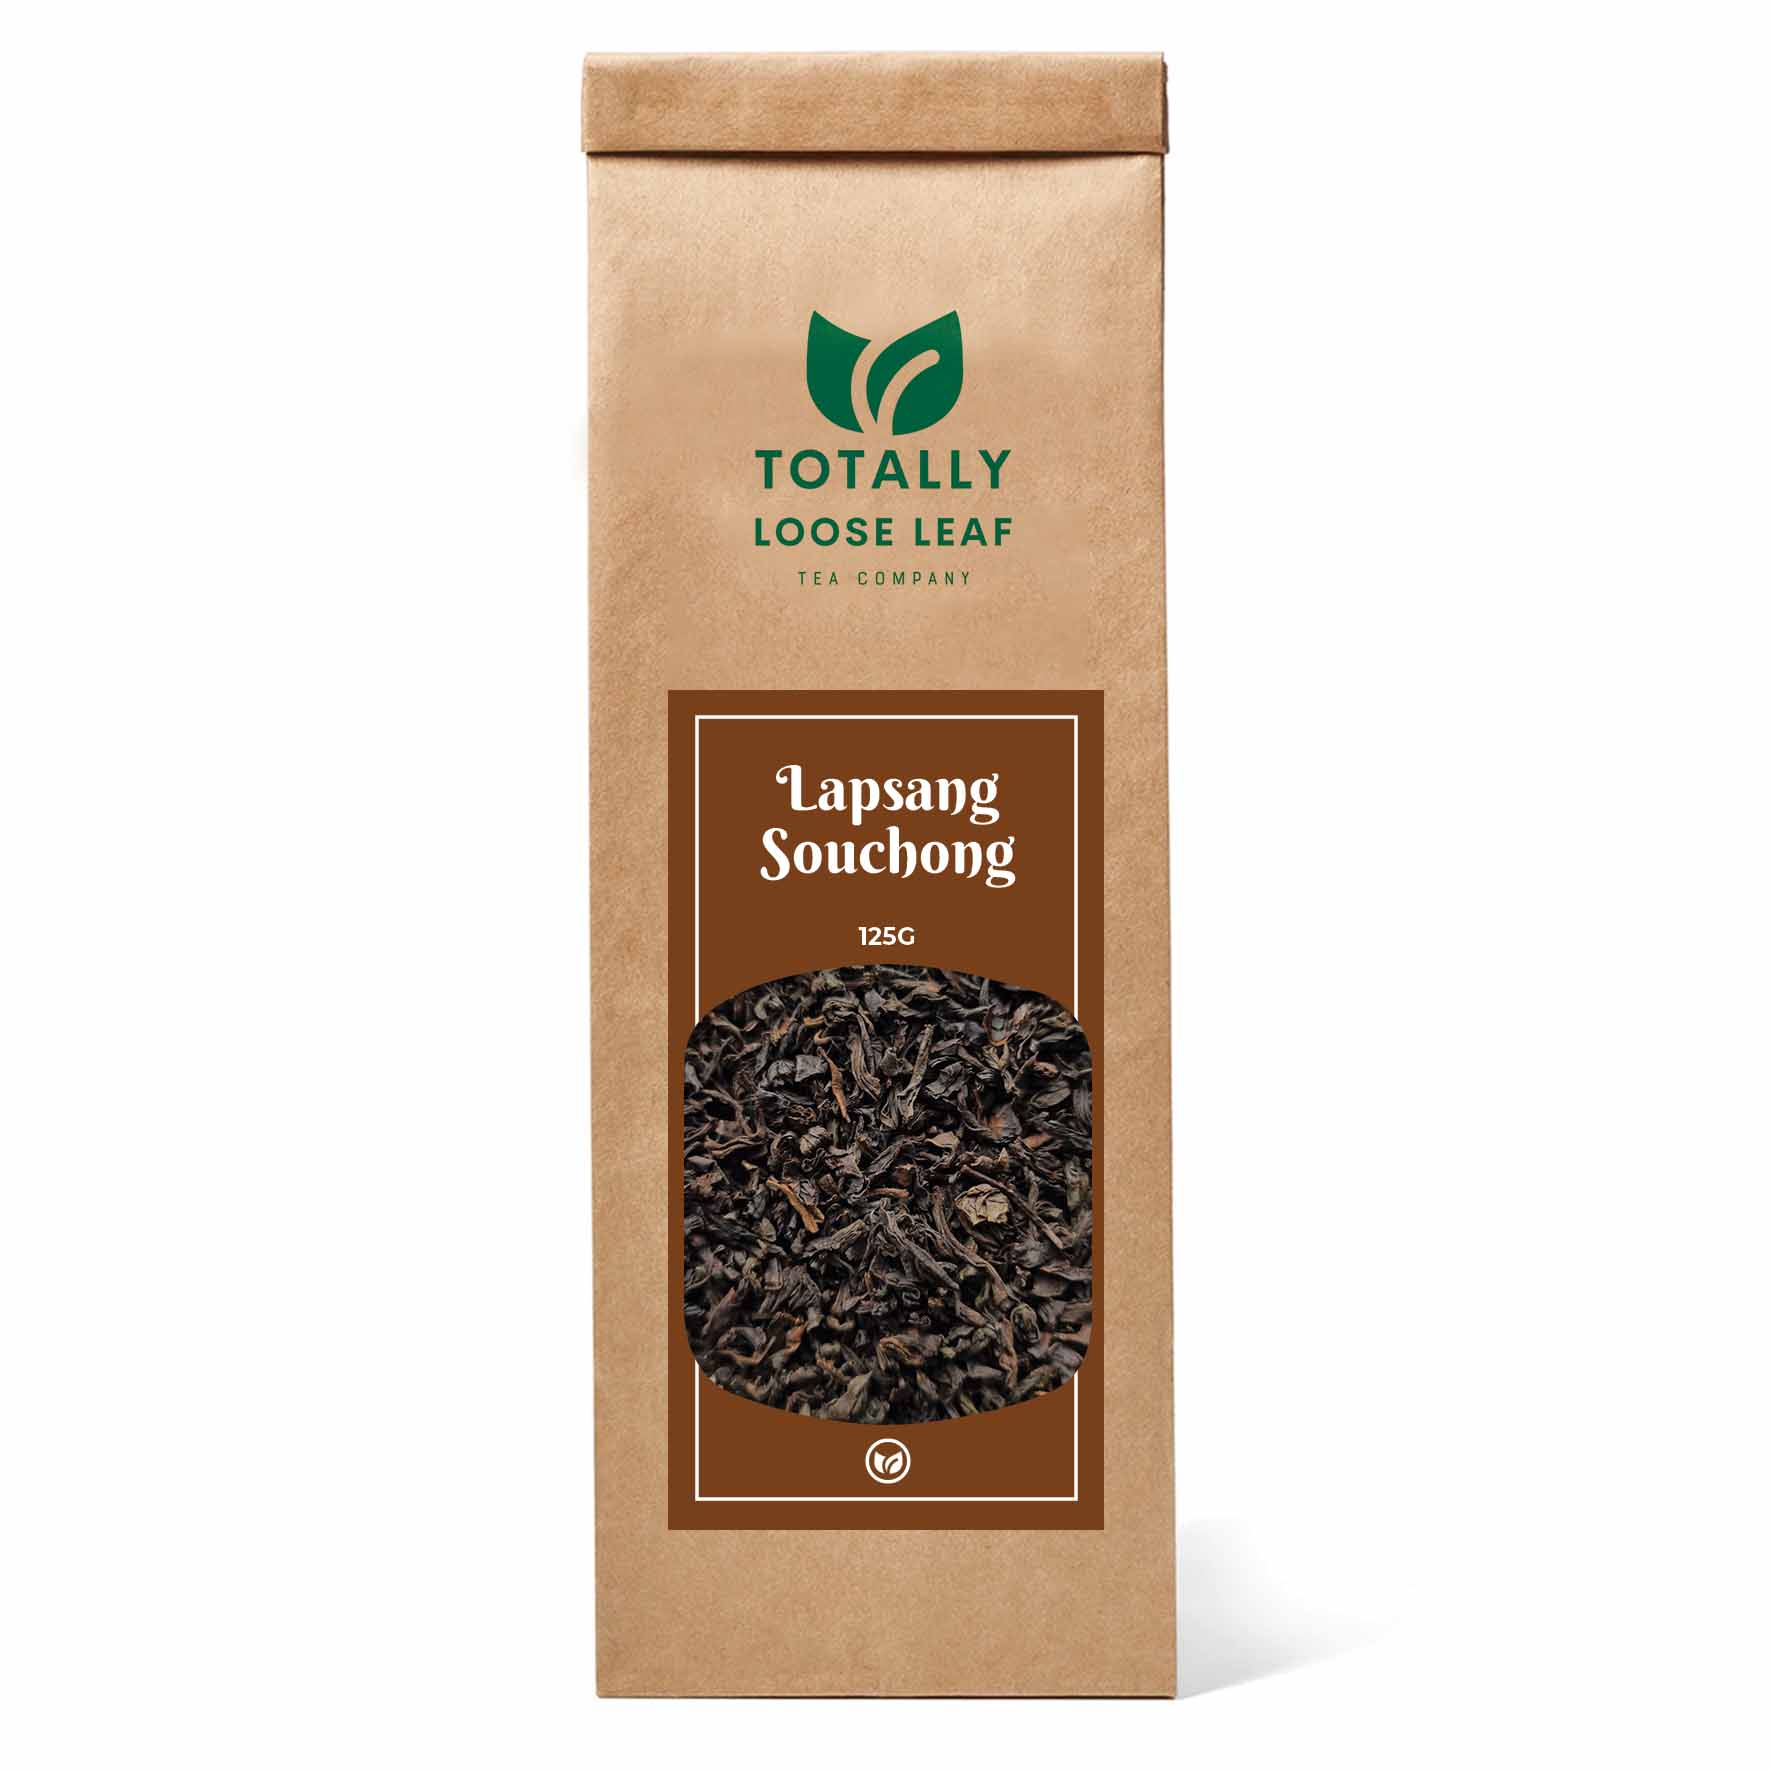 Lapsang Souchong Black Loose Leaf Tea - one pouch